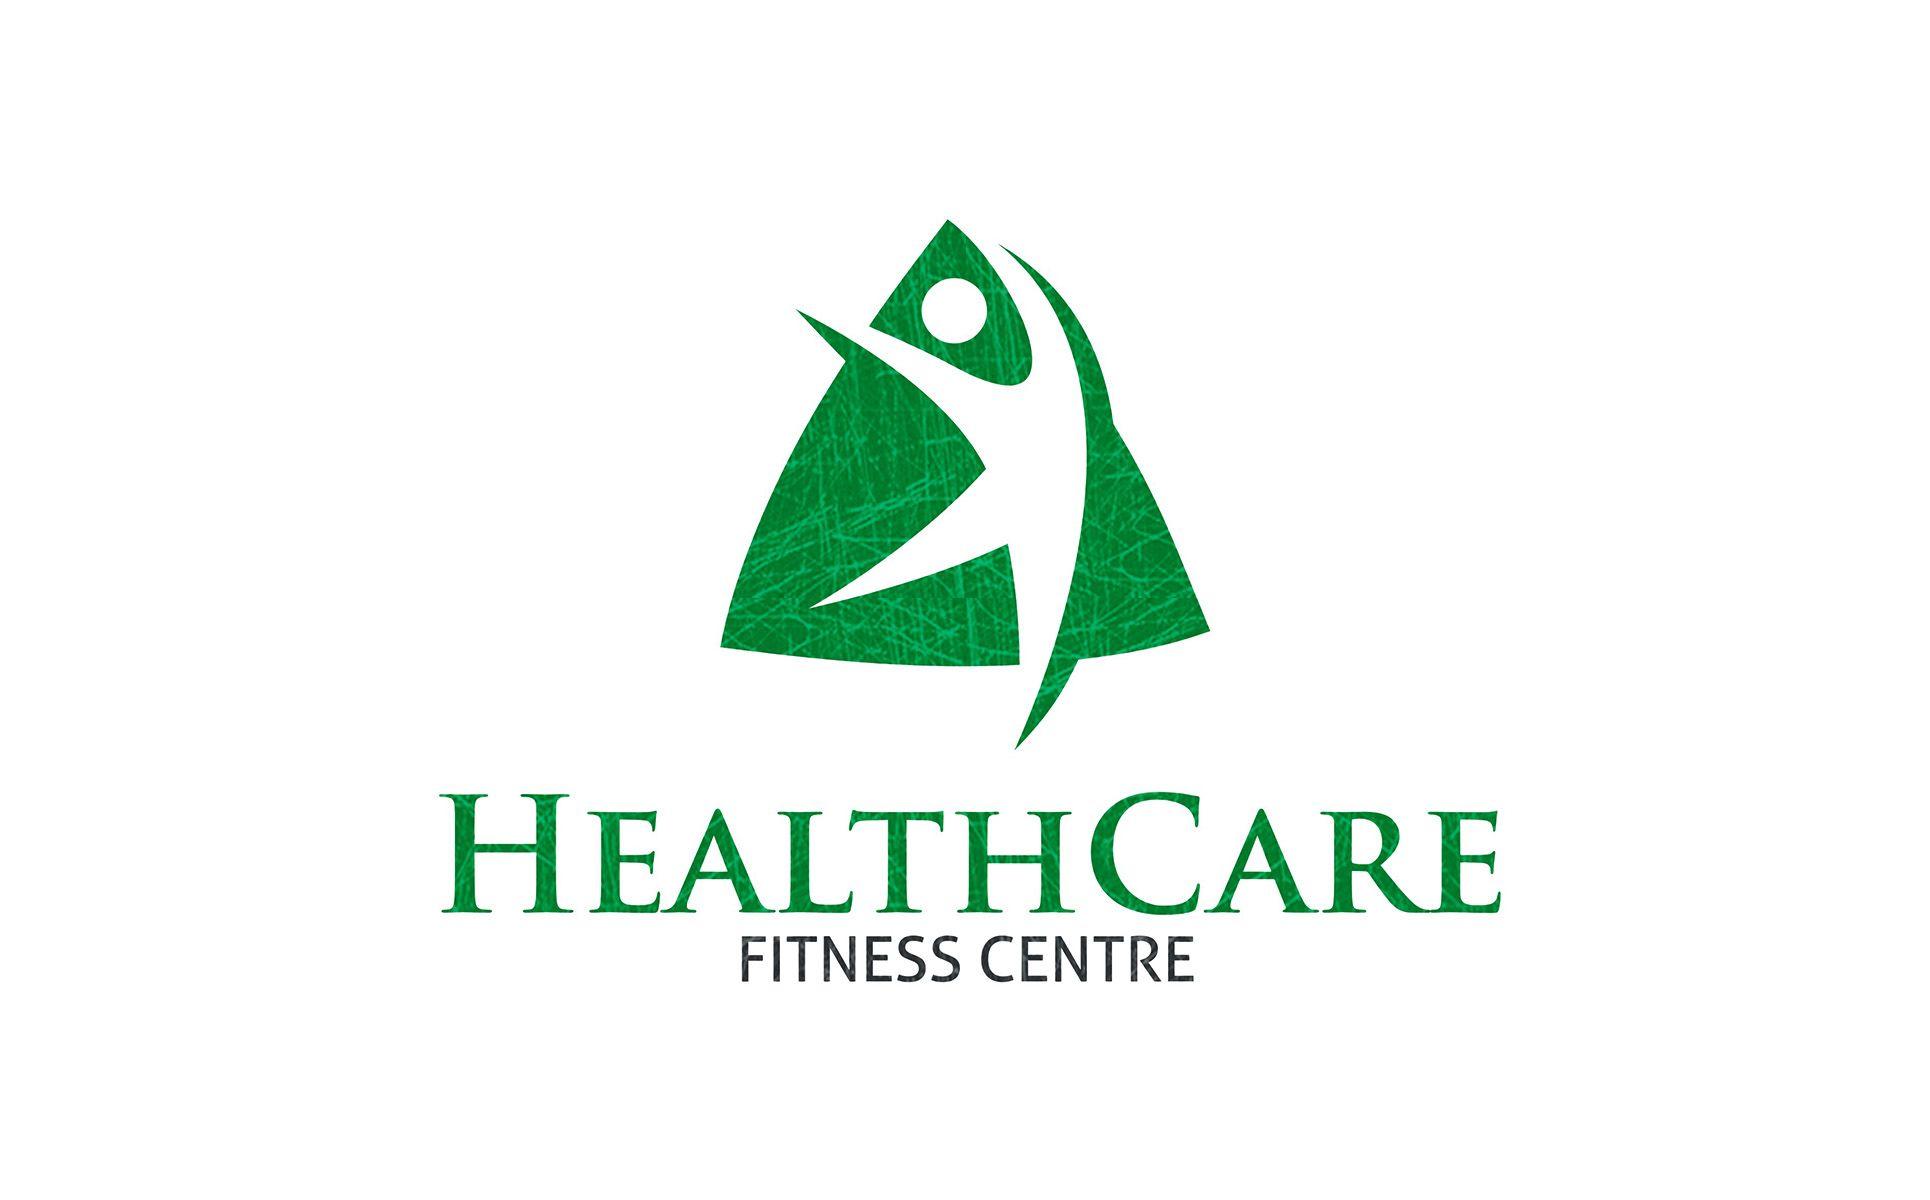 Care Logo - Health Care Logo Template #65775